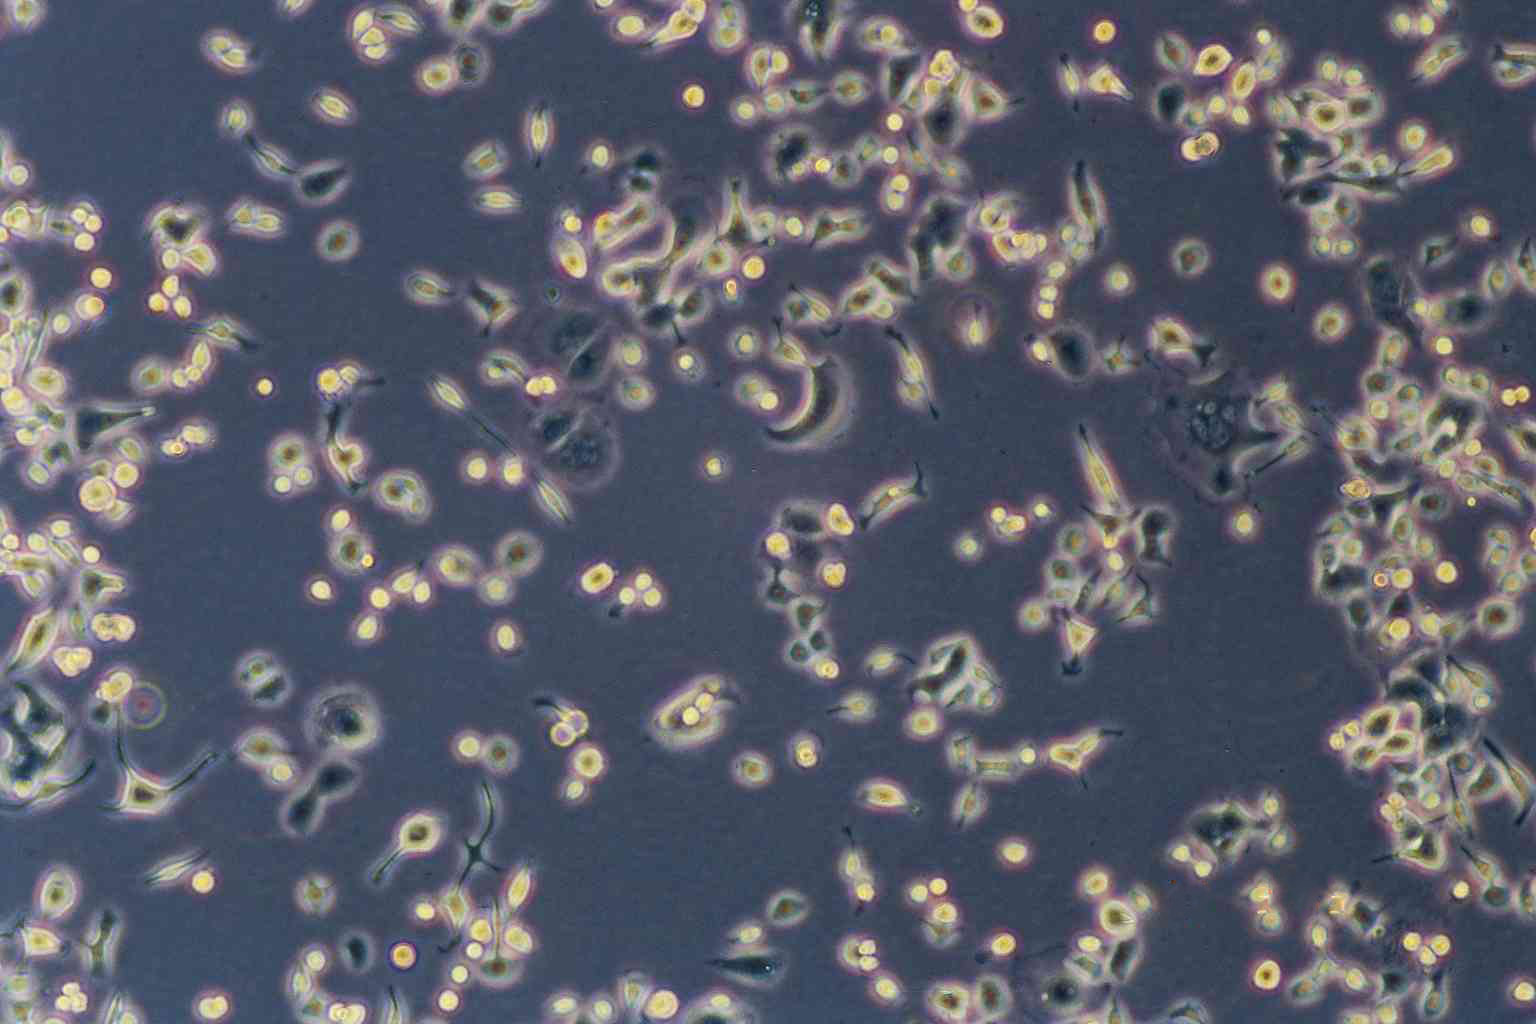 MDA-MB-435S Cells|人乳腺导管癌细胞系,MDA-MB-435S Cells